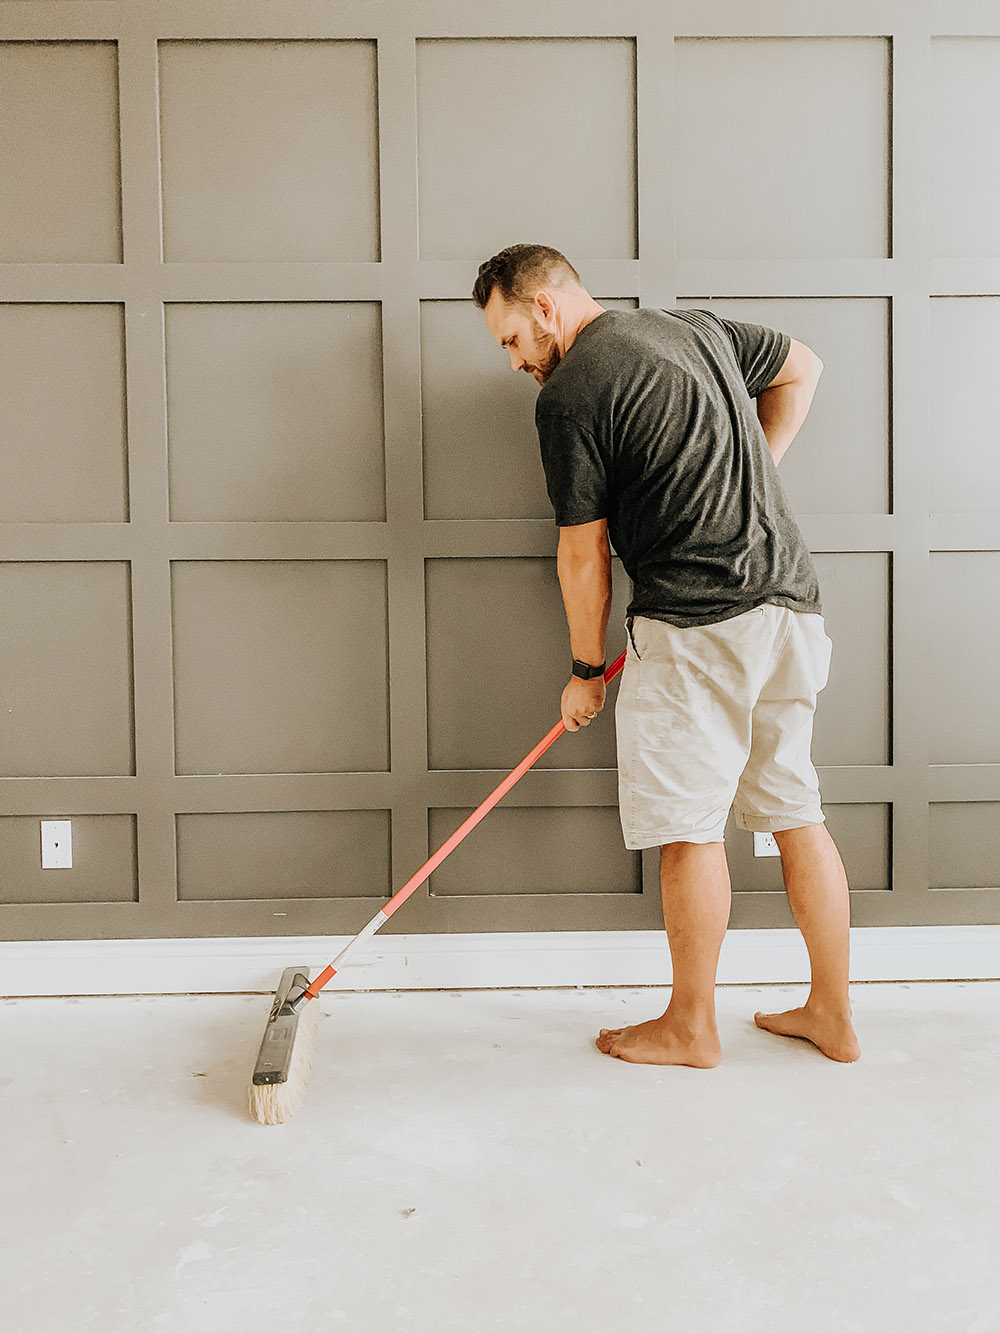 A man pushing a broom on concrete floors.